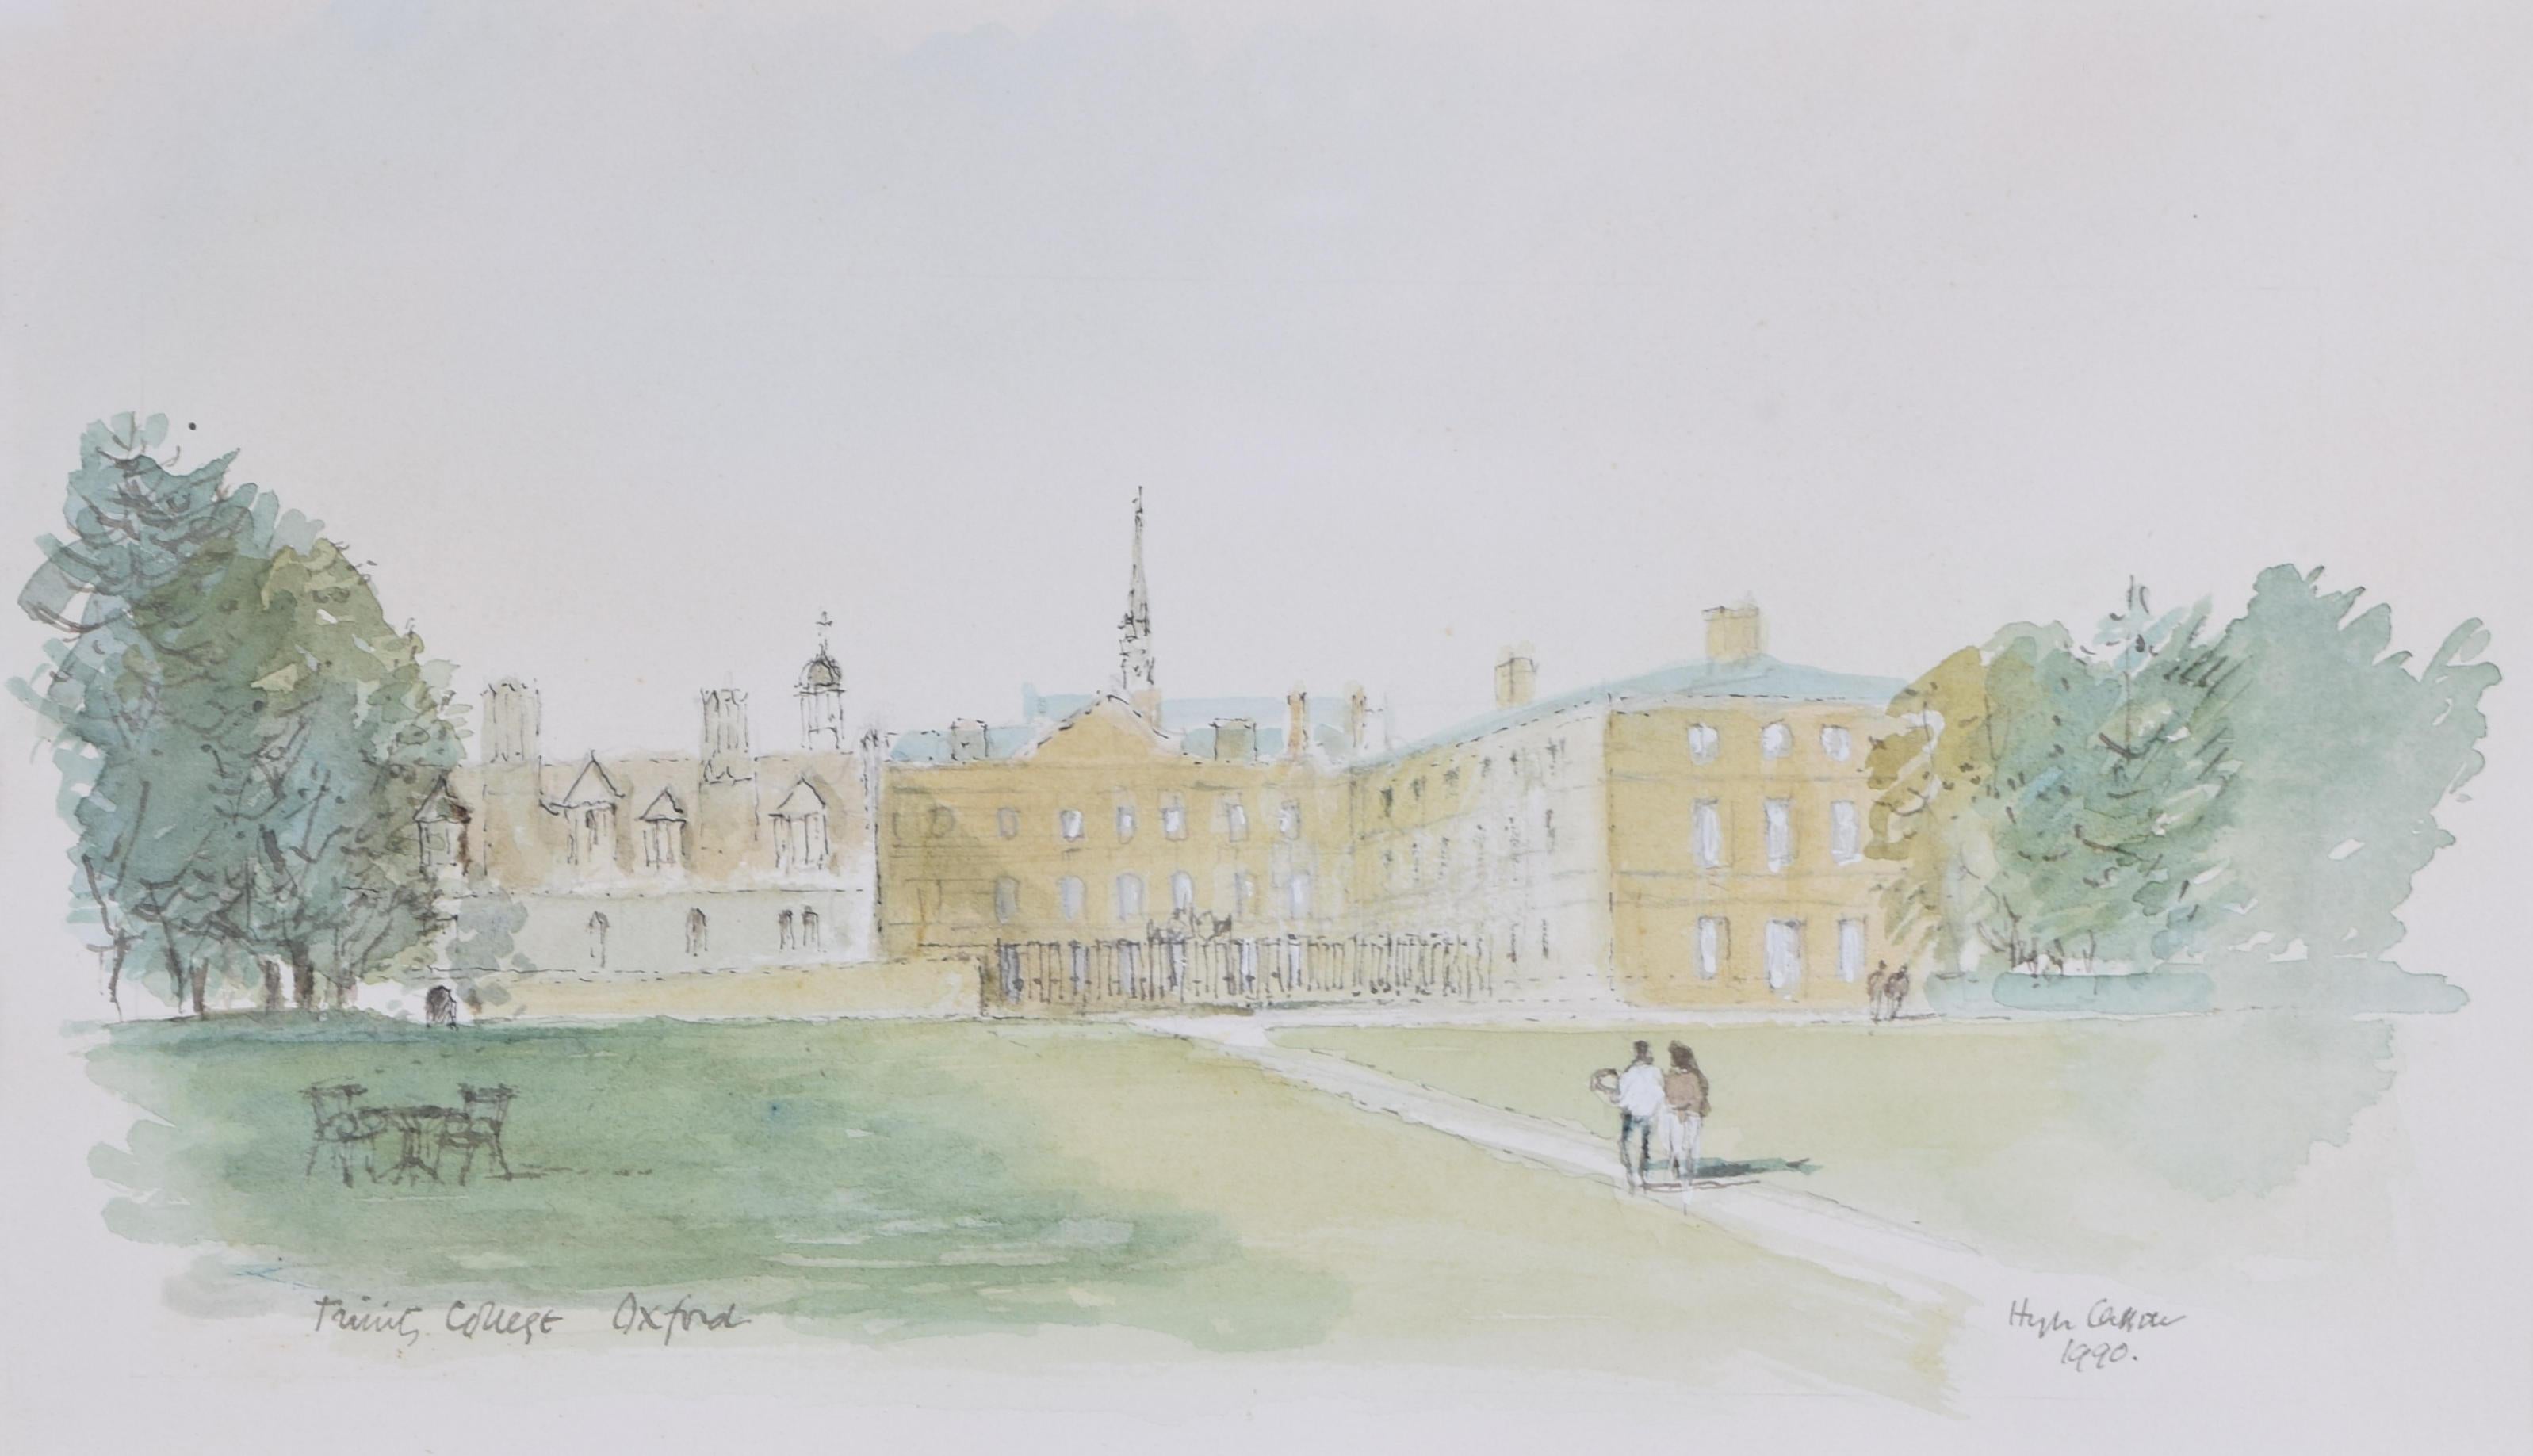 Trinity College, Oxford watercolour by Hugh Casson